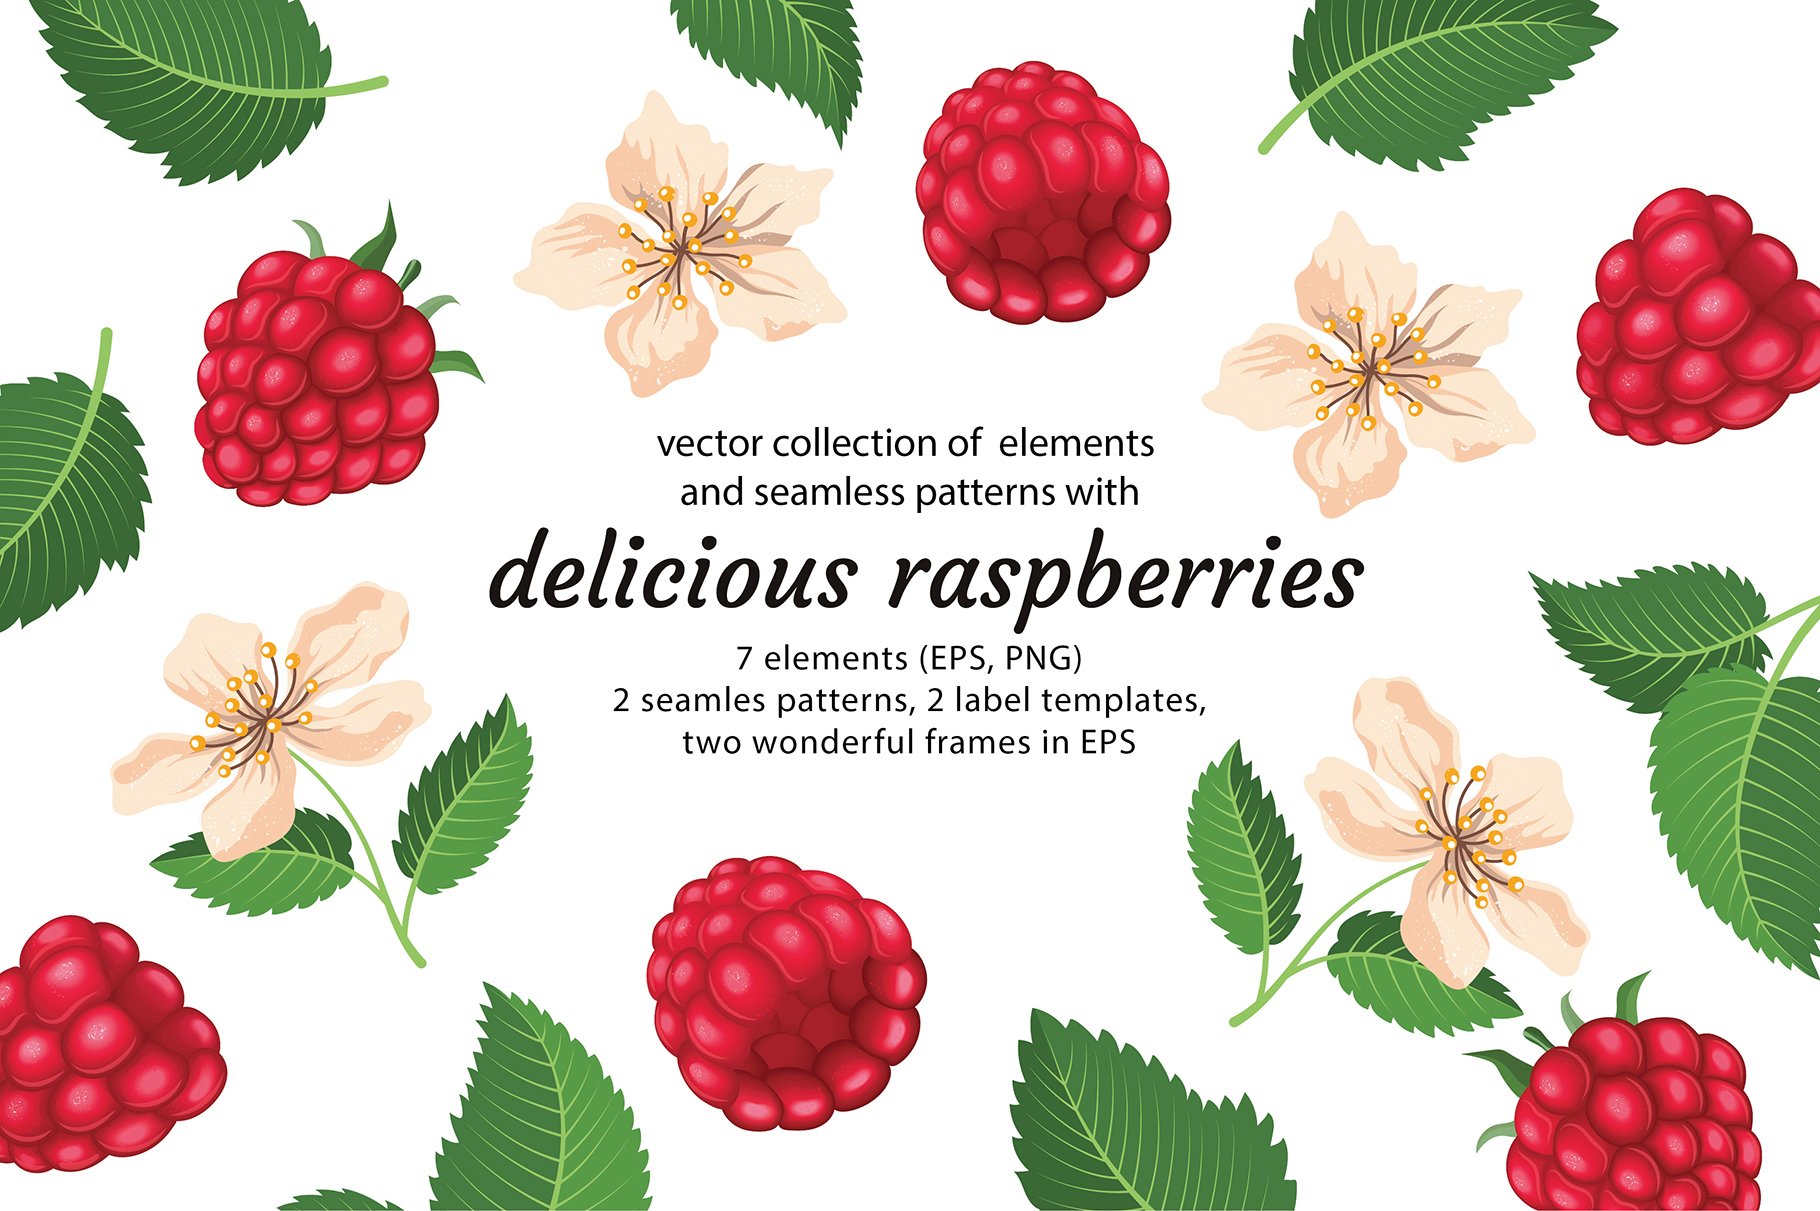 Delicious raspberries vector set cover image.